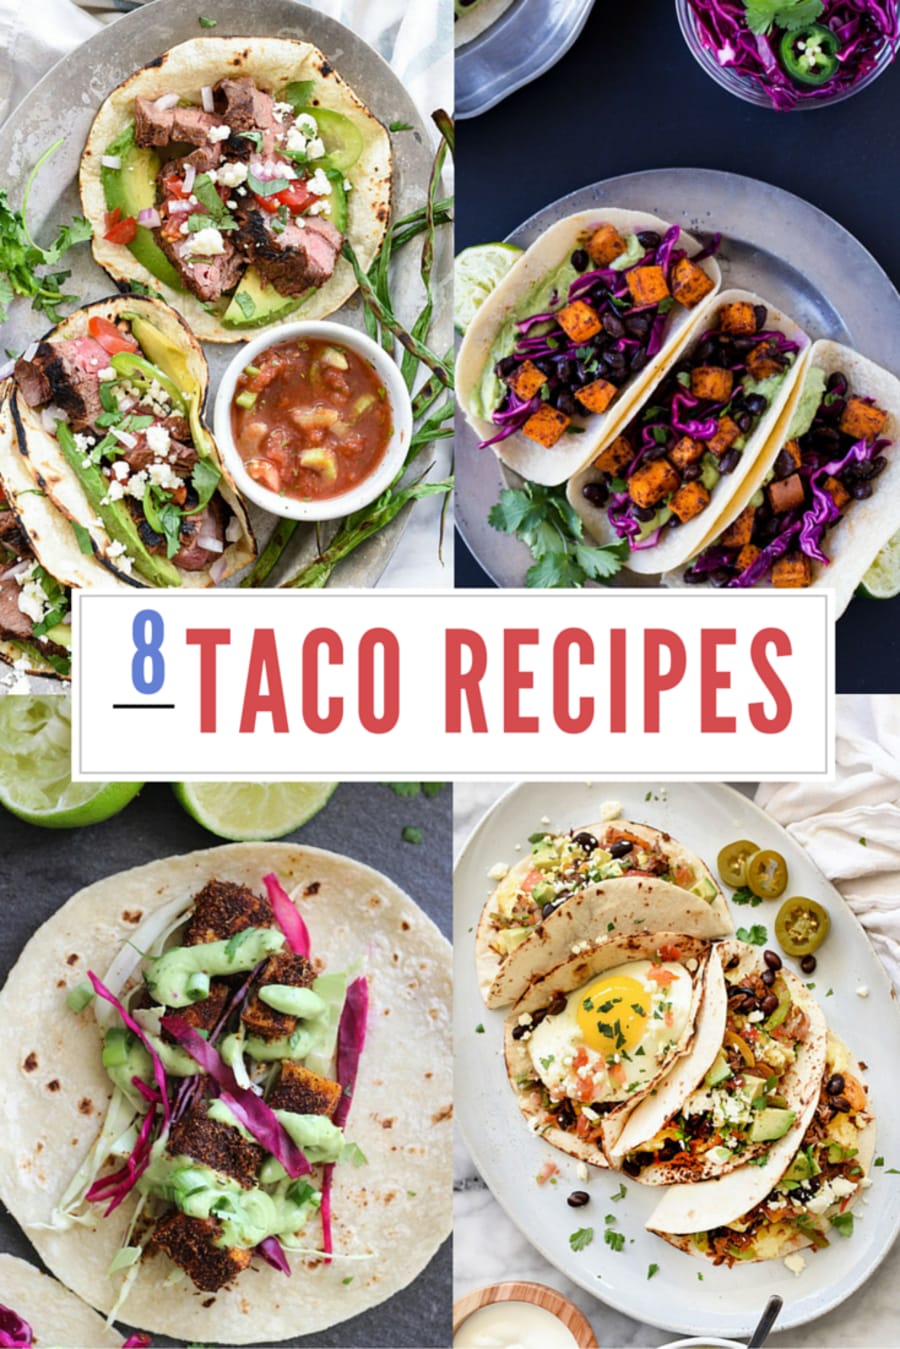 8 Tasty Recipes To Make For Taco Tuesday